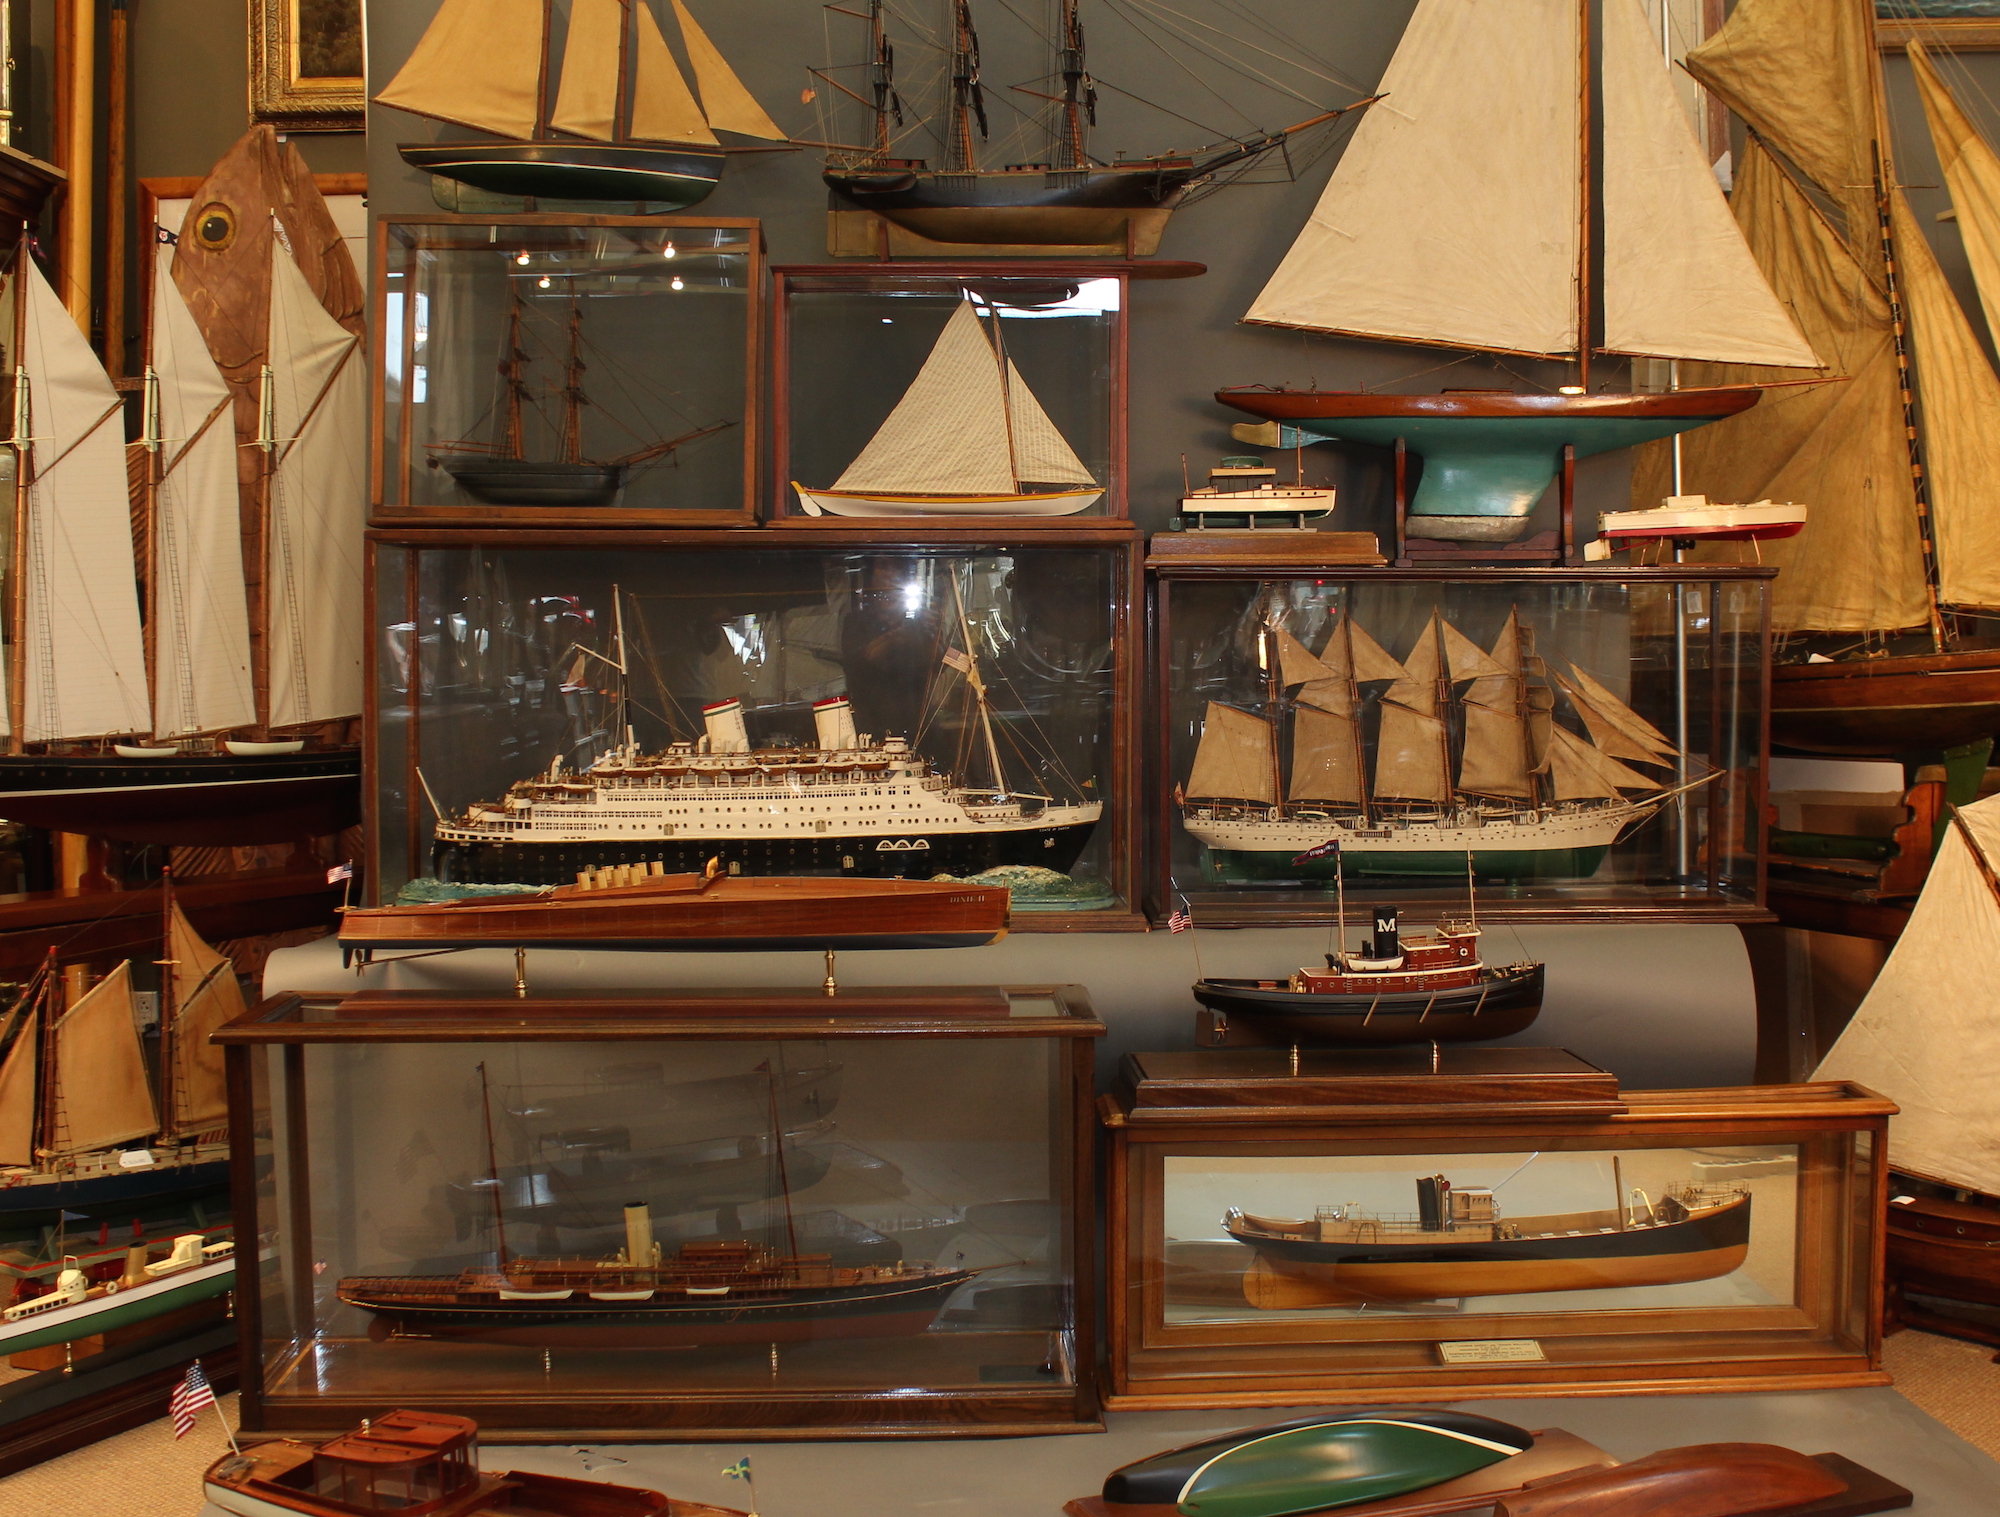 Unique Nautical Lanterns, Dockyard Builder's Ship Models and Rare